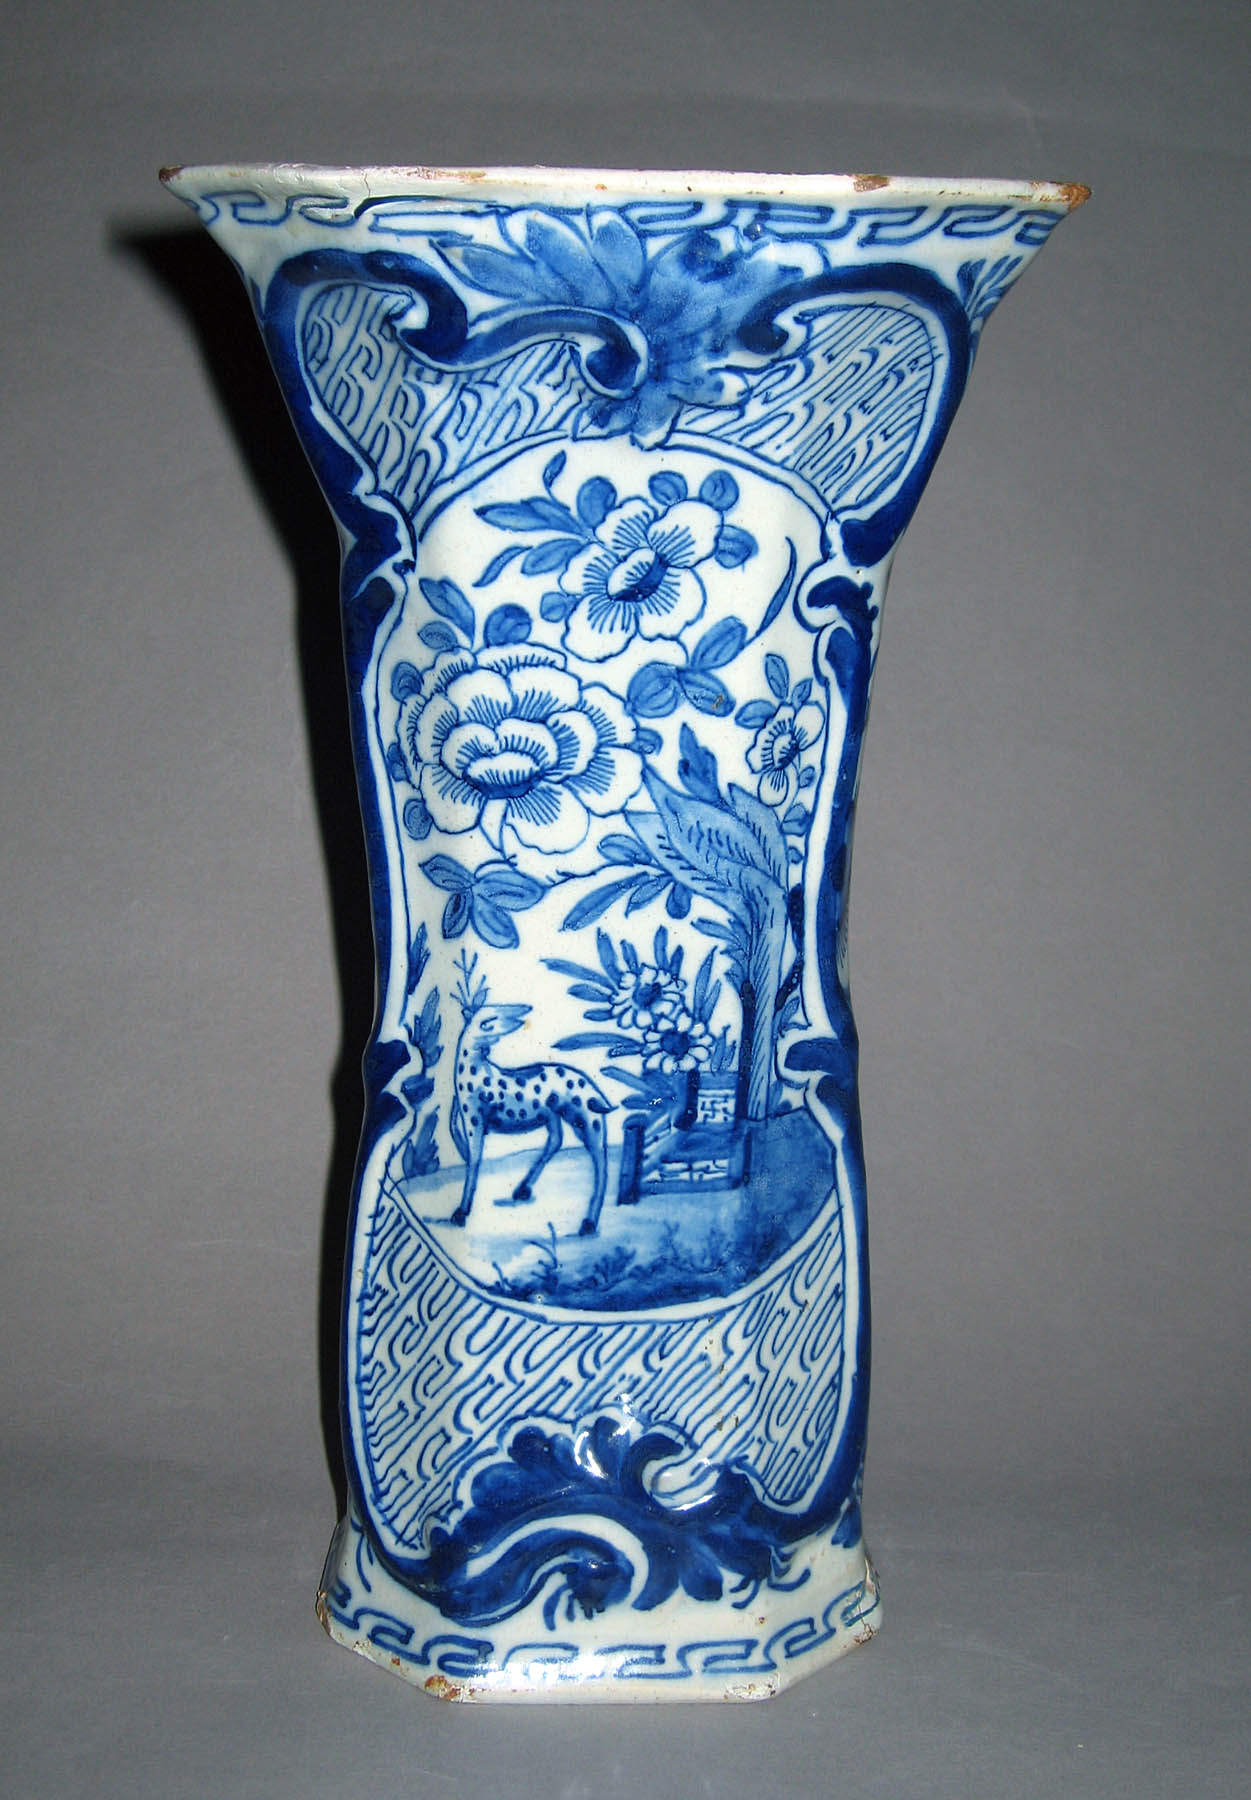 1960.0084.002 Delft vase